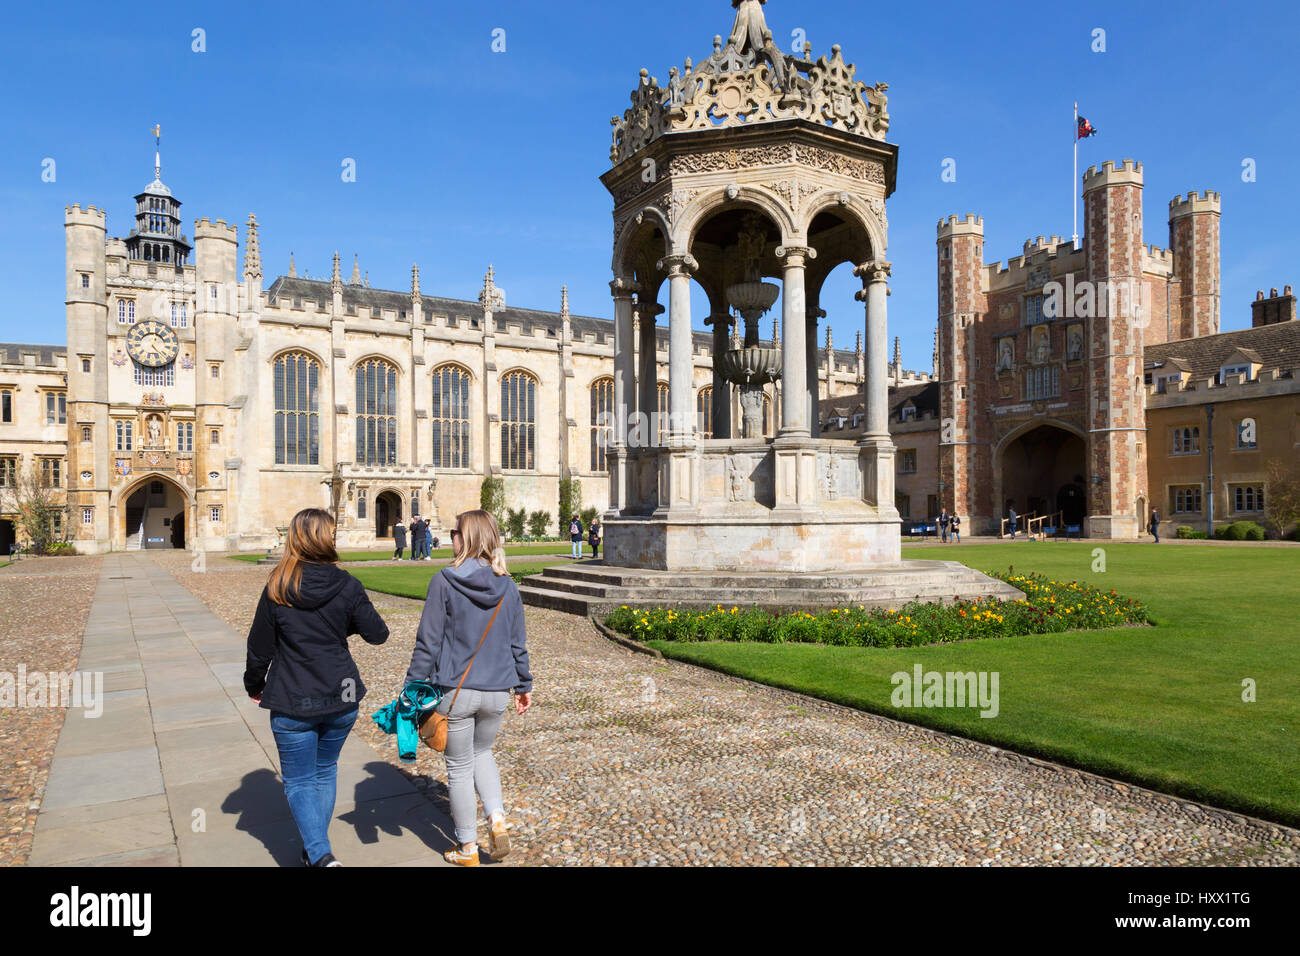 Trinity College Cambridge - People walking in Great Court, Trinity College, Cambridge University, Cambridge UK Stock Photo